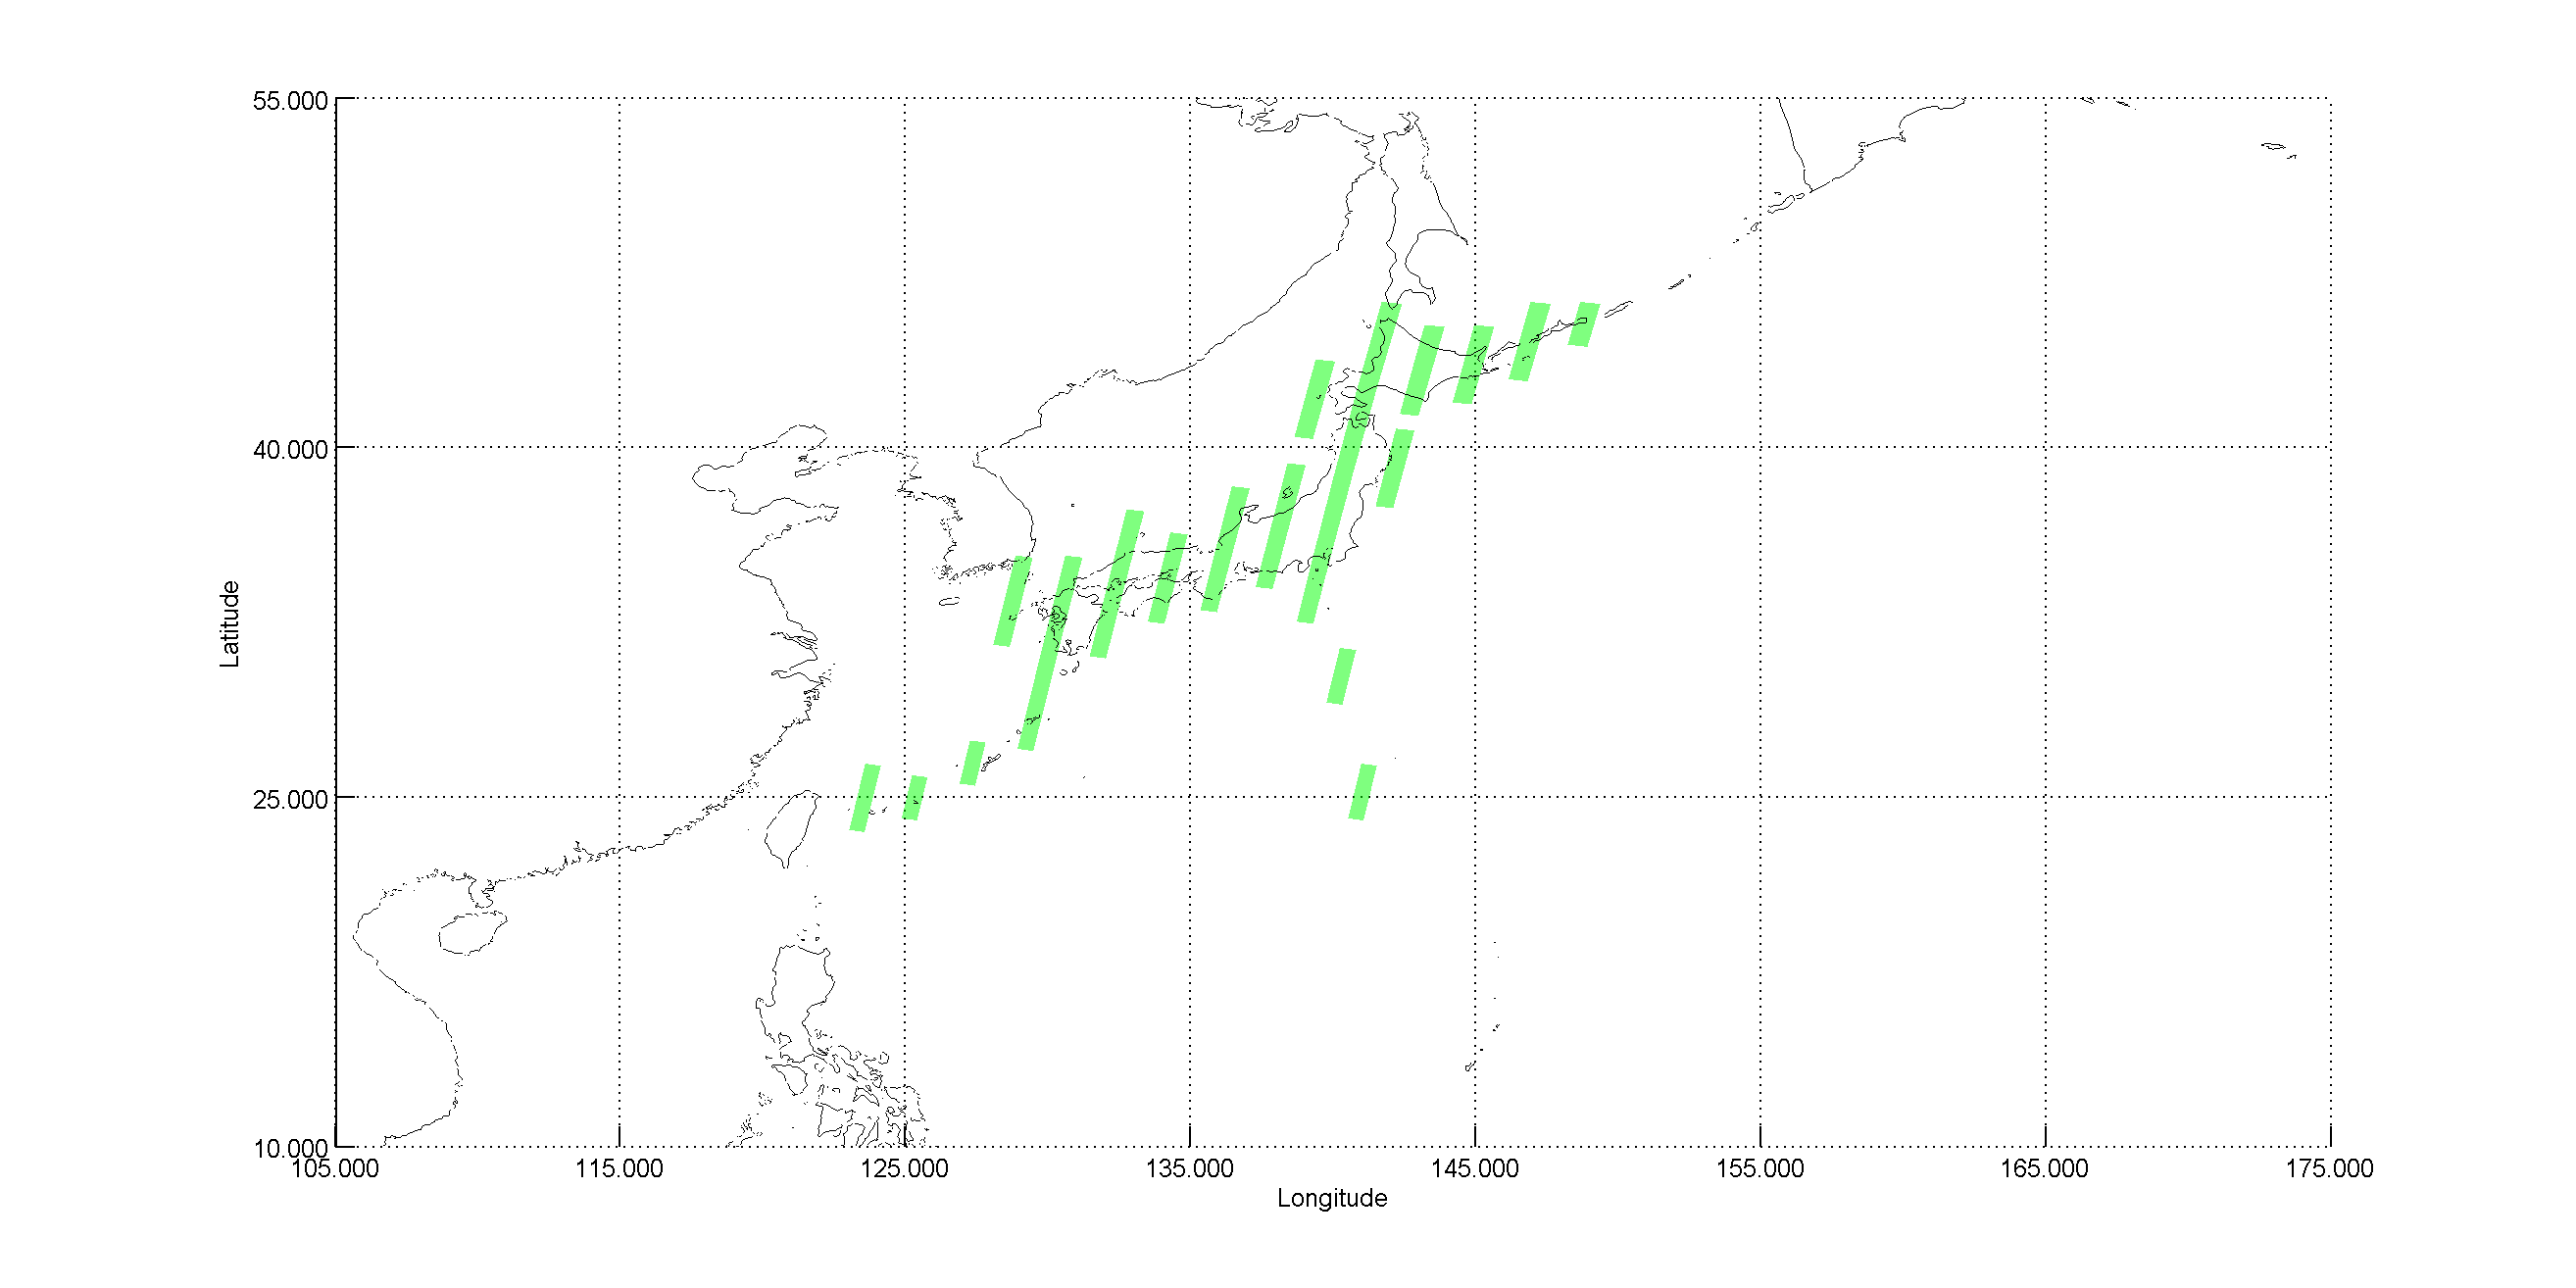 CYCLE_160 - Japan Descending passes